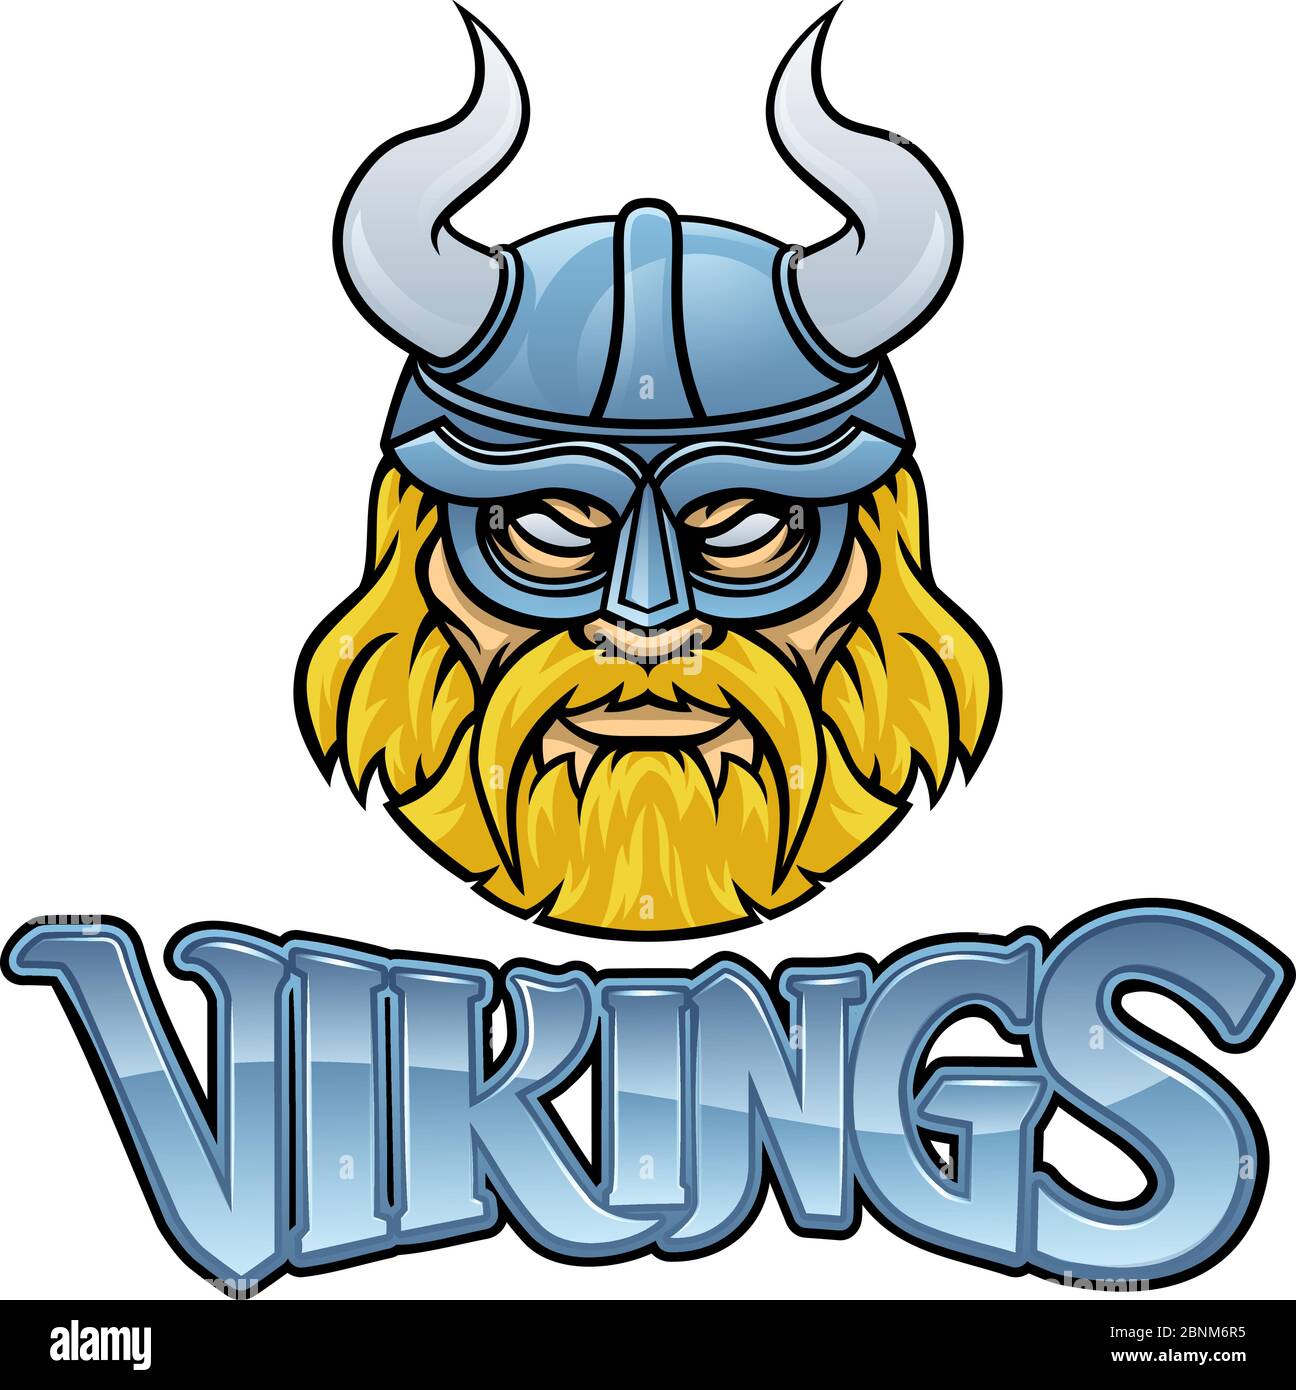 Motif de la mascotte Viking Warrior Illustration de Vecteur